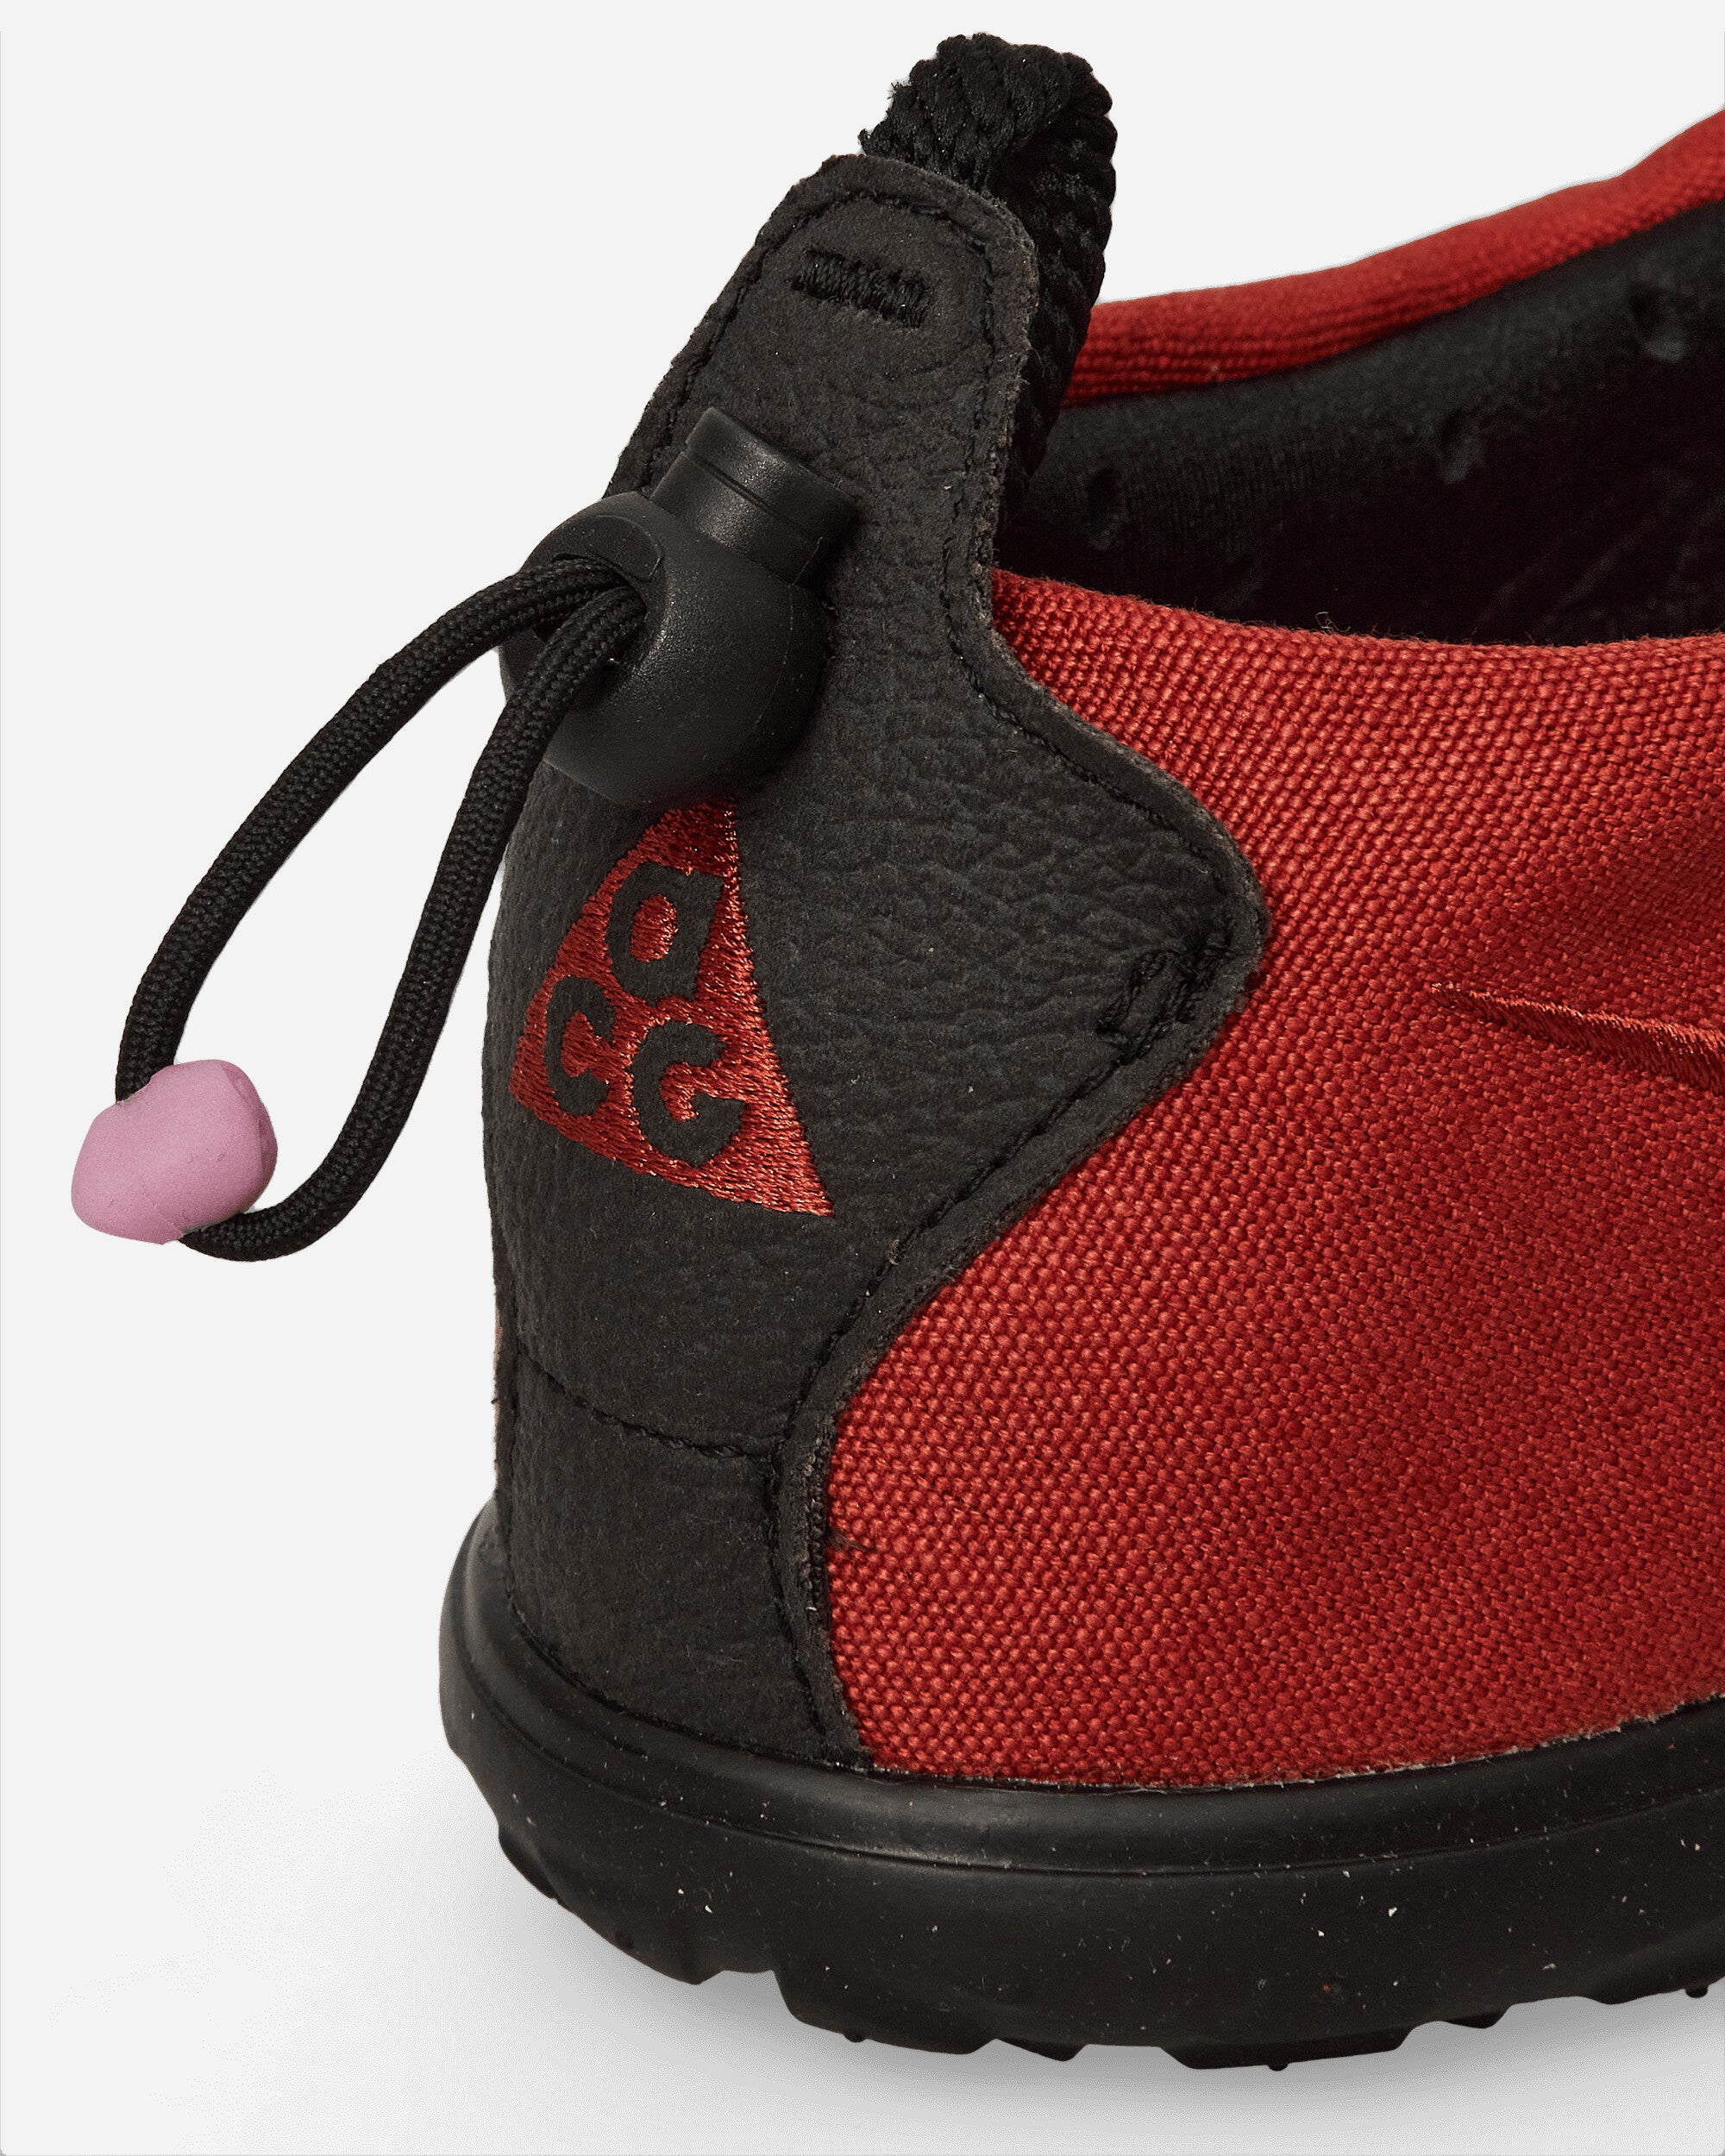 Nike Acg Moc Rugged Orange/Black Sneakers Low DZ3407-800